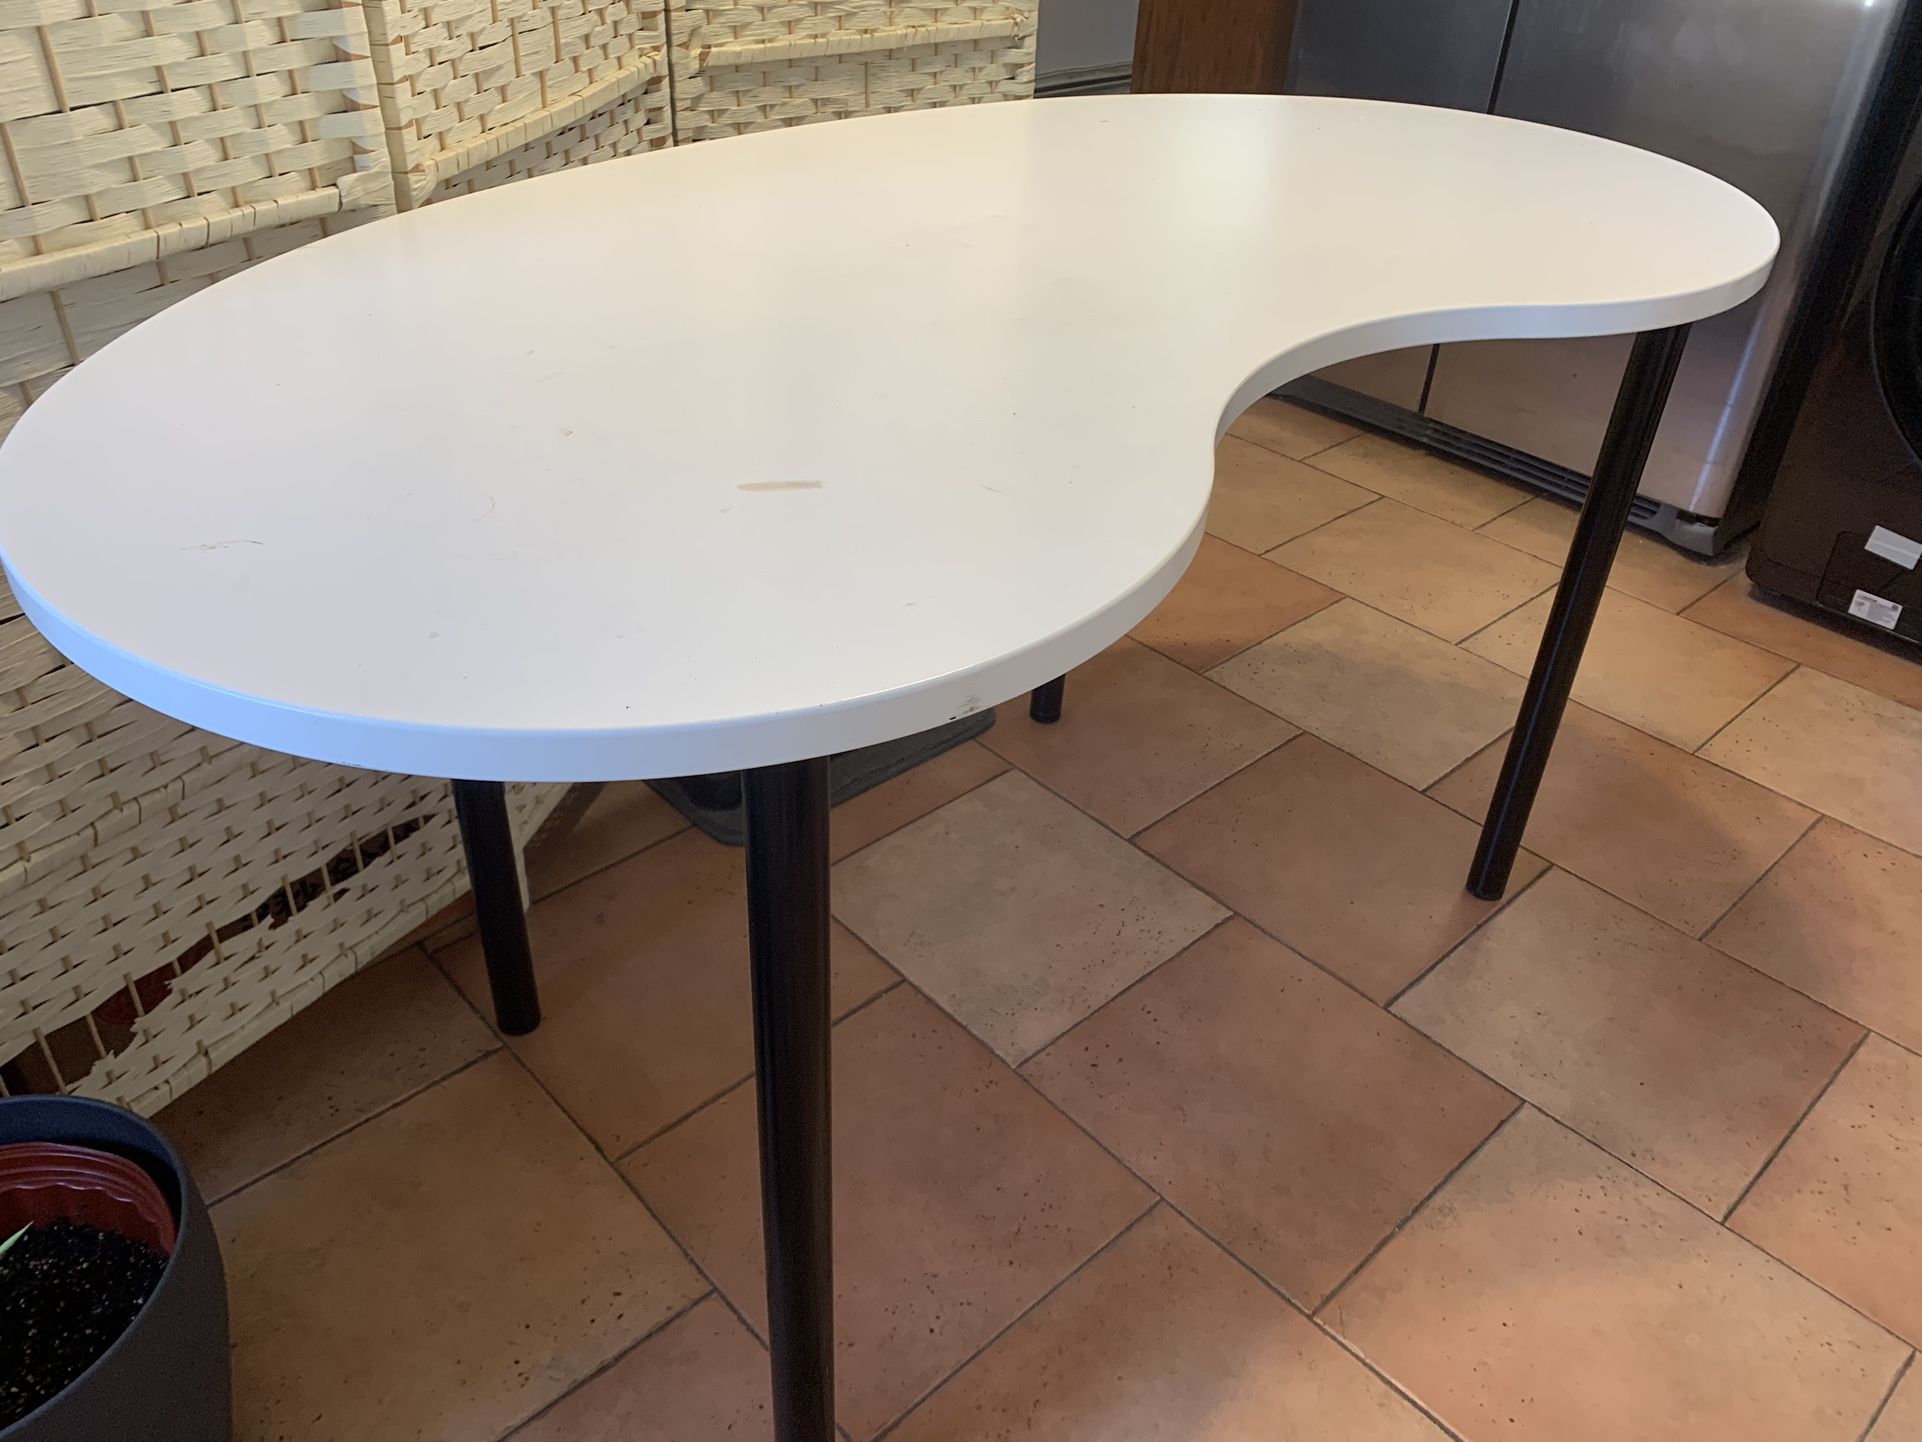 Ikea Desk/table